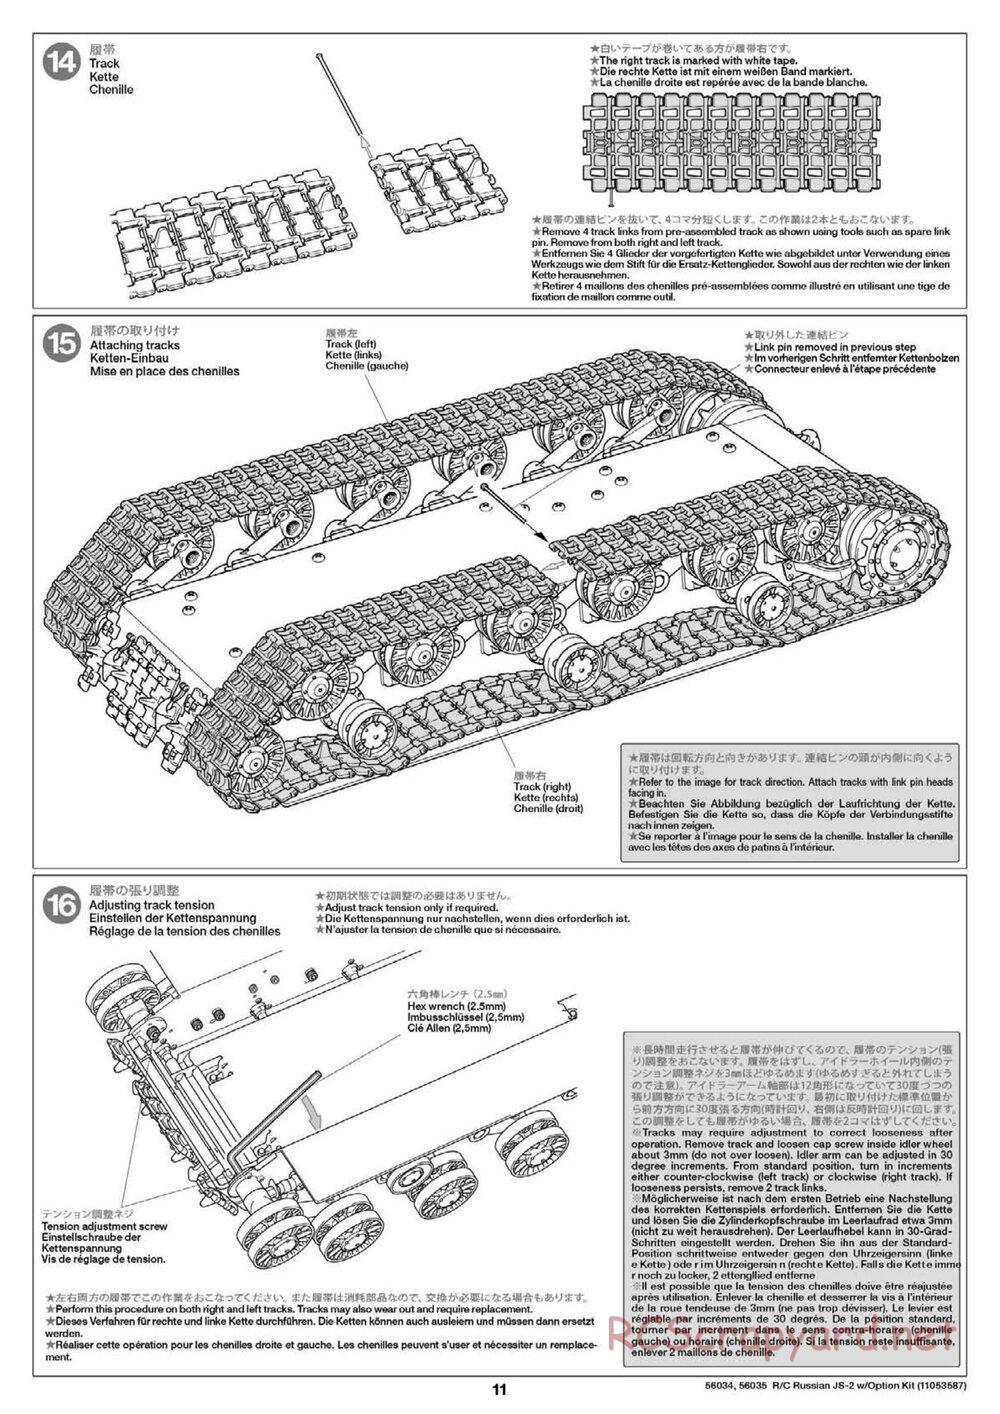 Tamiya - Russian Heavy Tank JS-2 1944 ChKZ - 1/16 Scale Chassis - Manual - Page 11